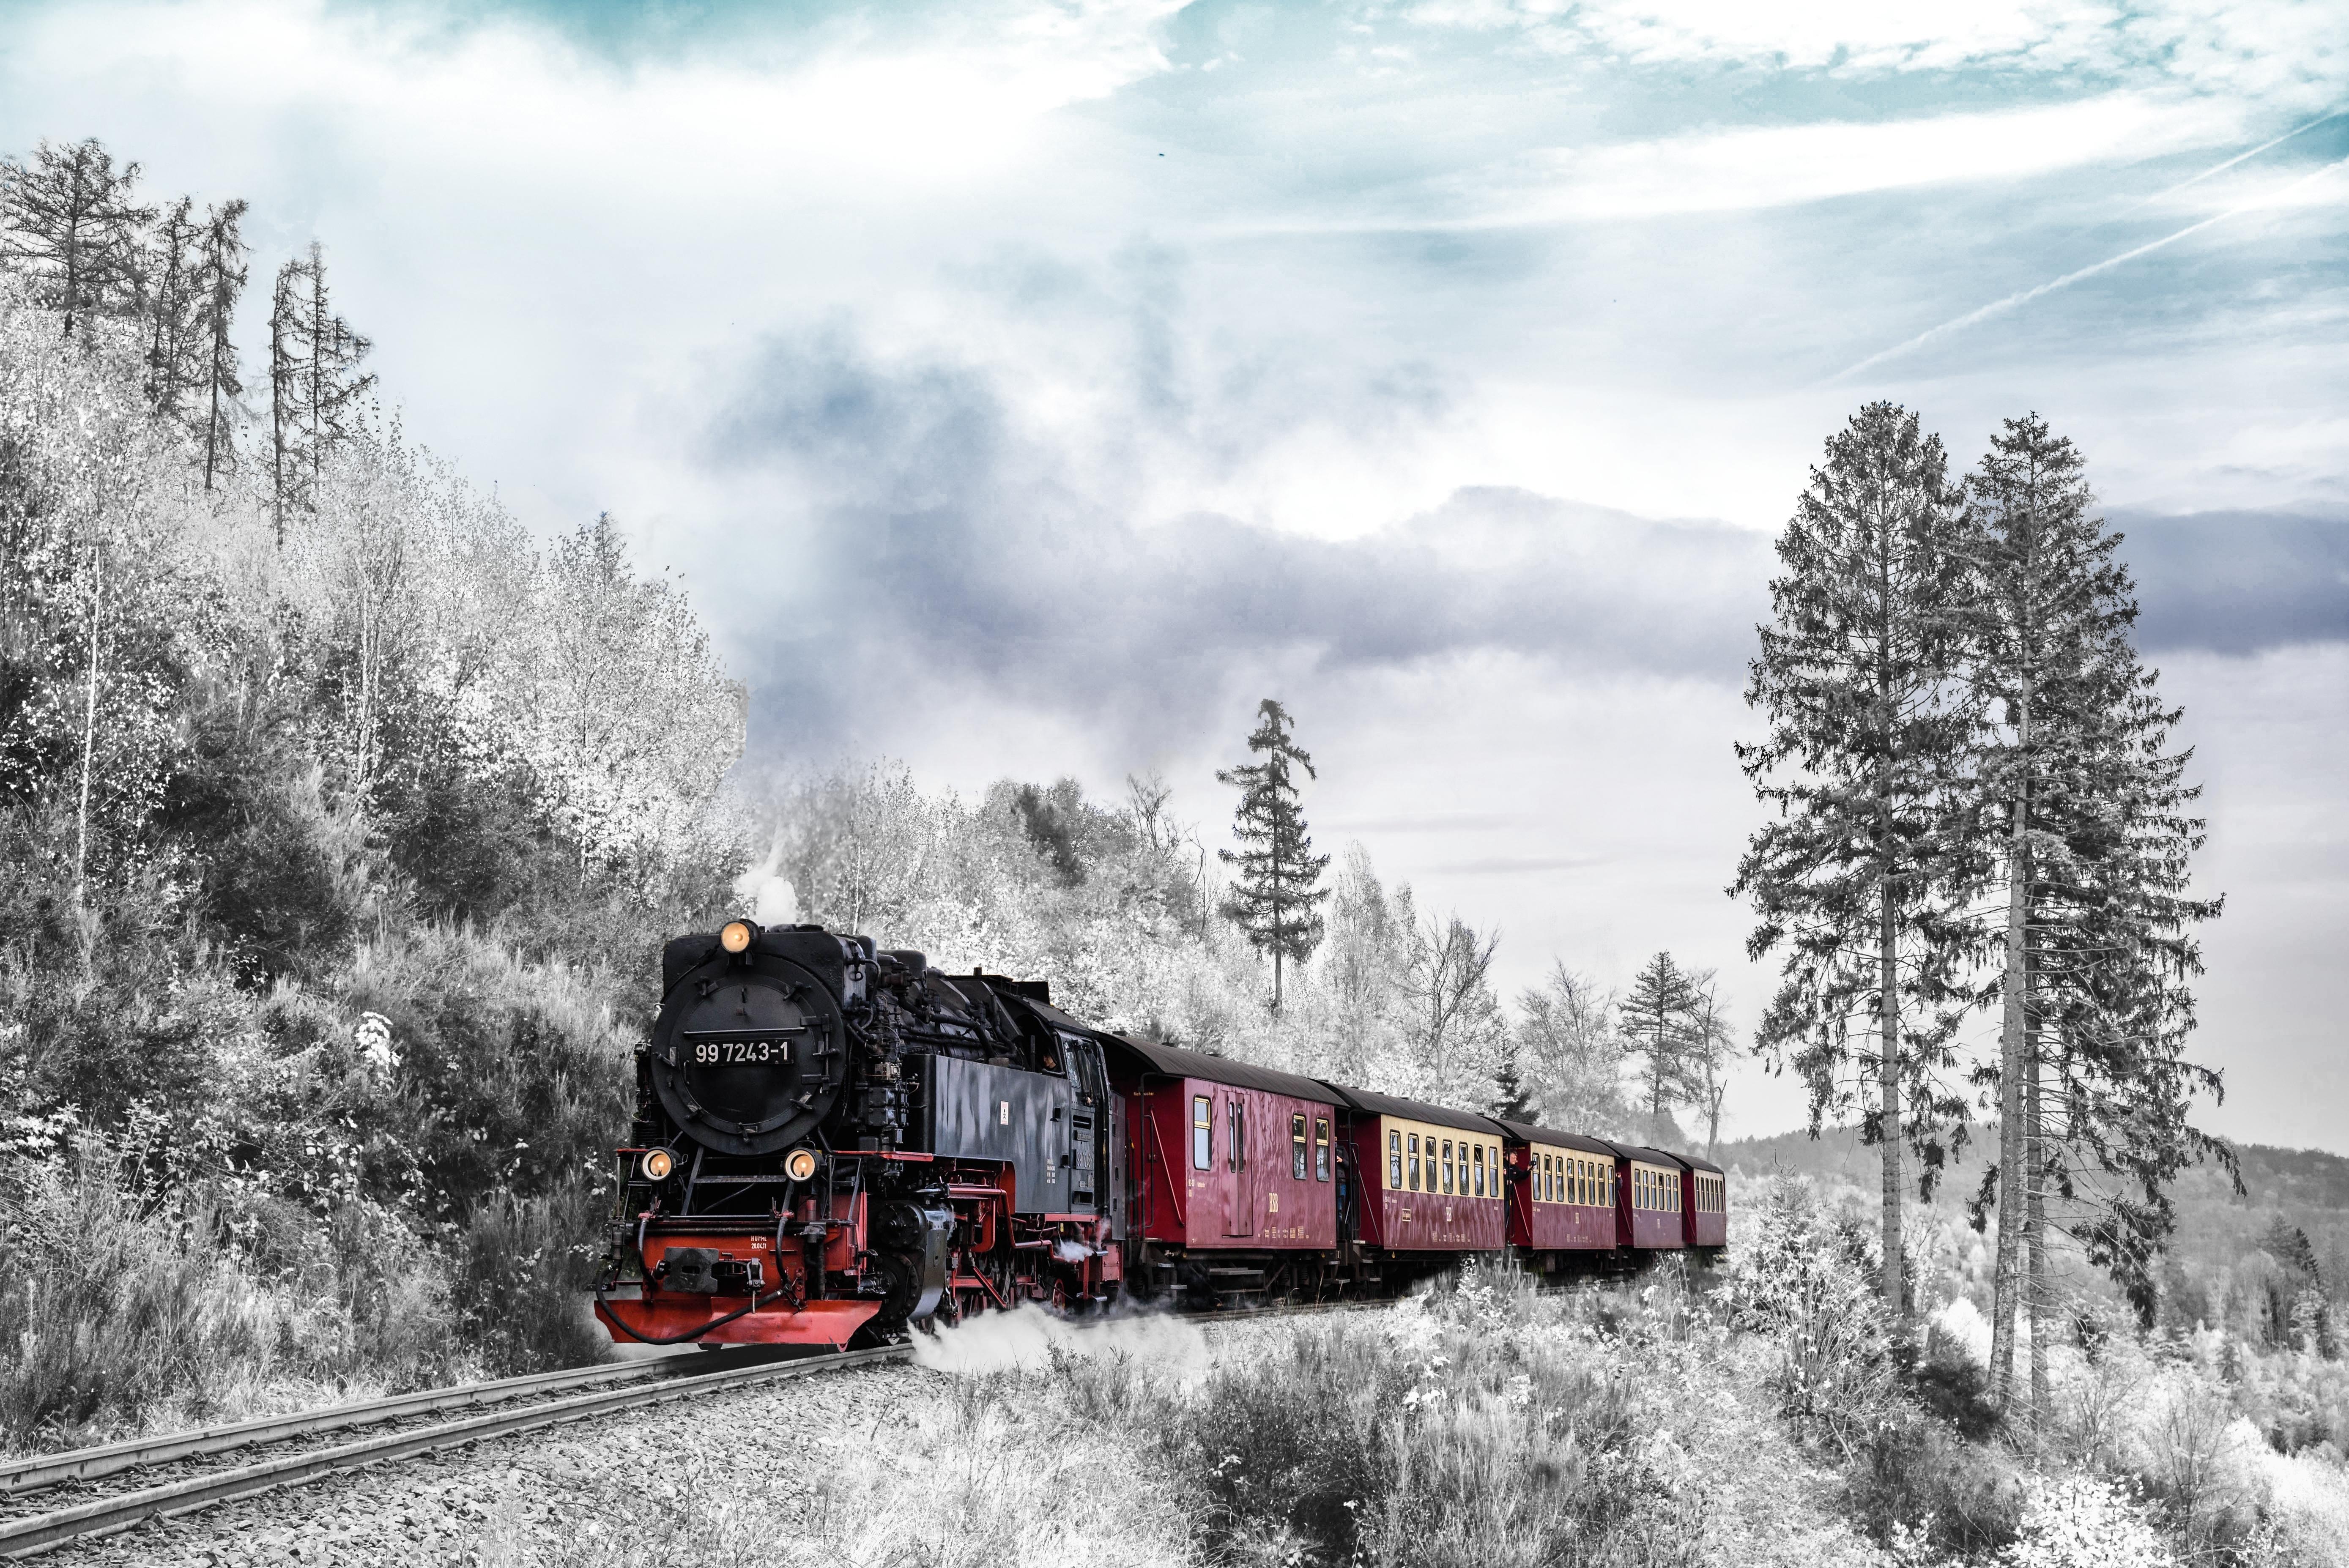 Download wallpaper 5556x3709 train, forest, winter, railway